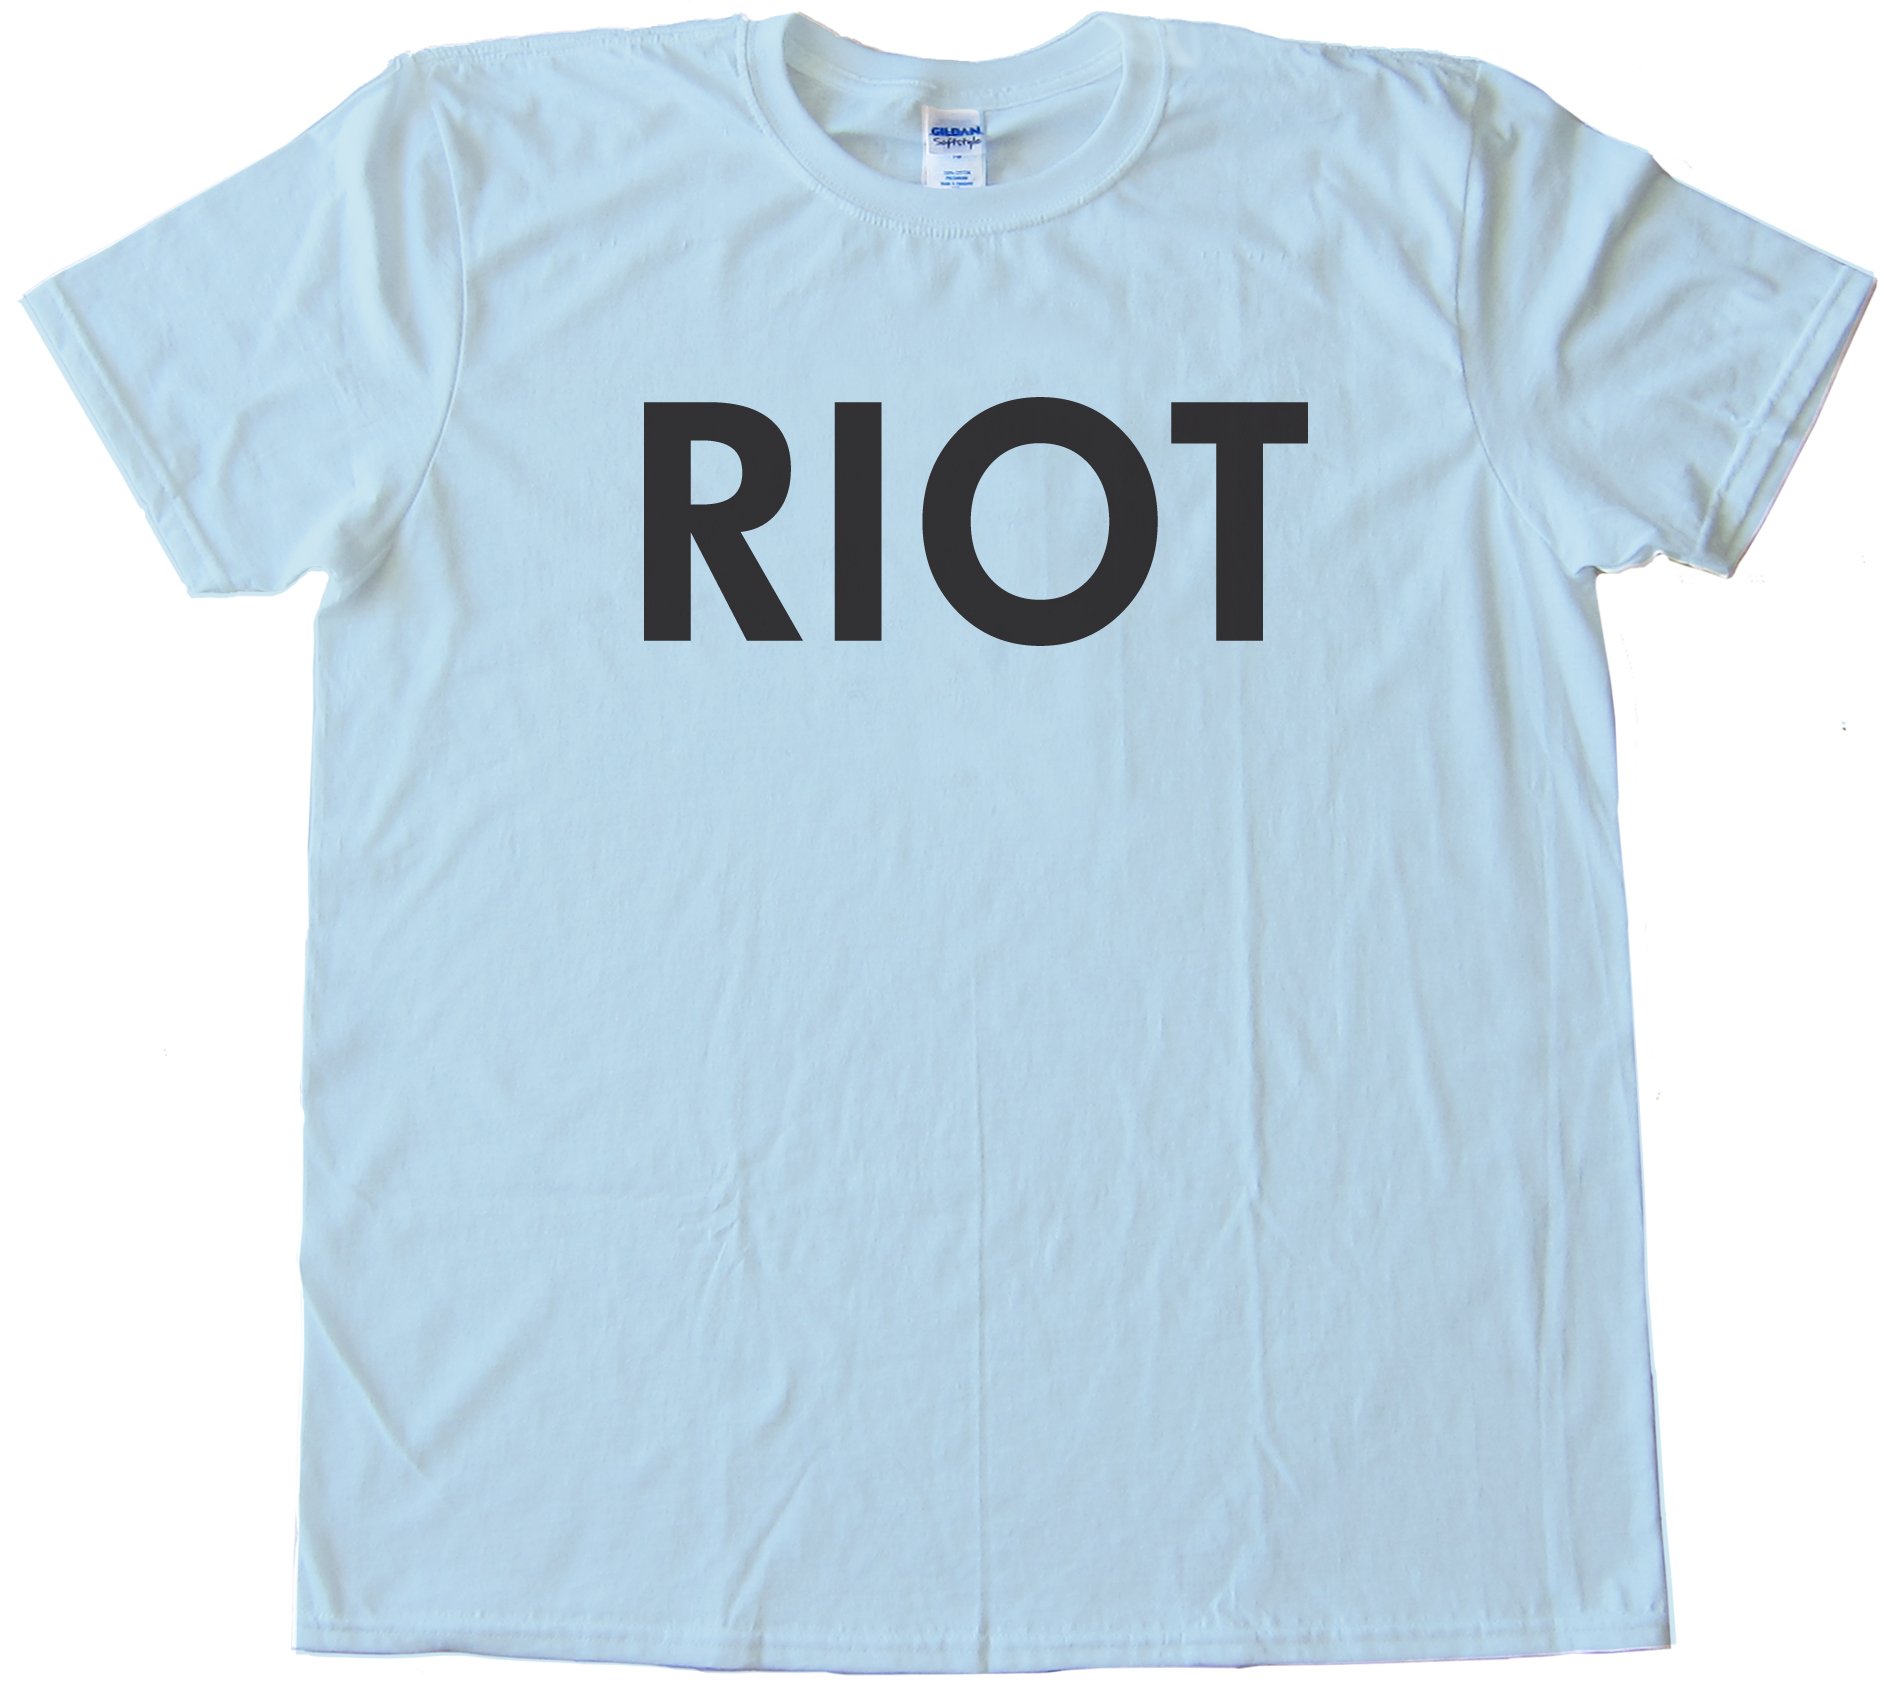 Riot - It'S Always Sunny In Philadelphia Tee Shirt